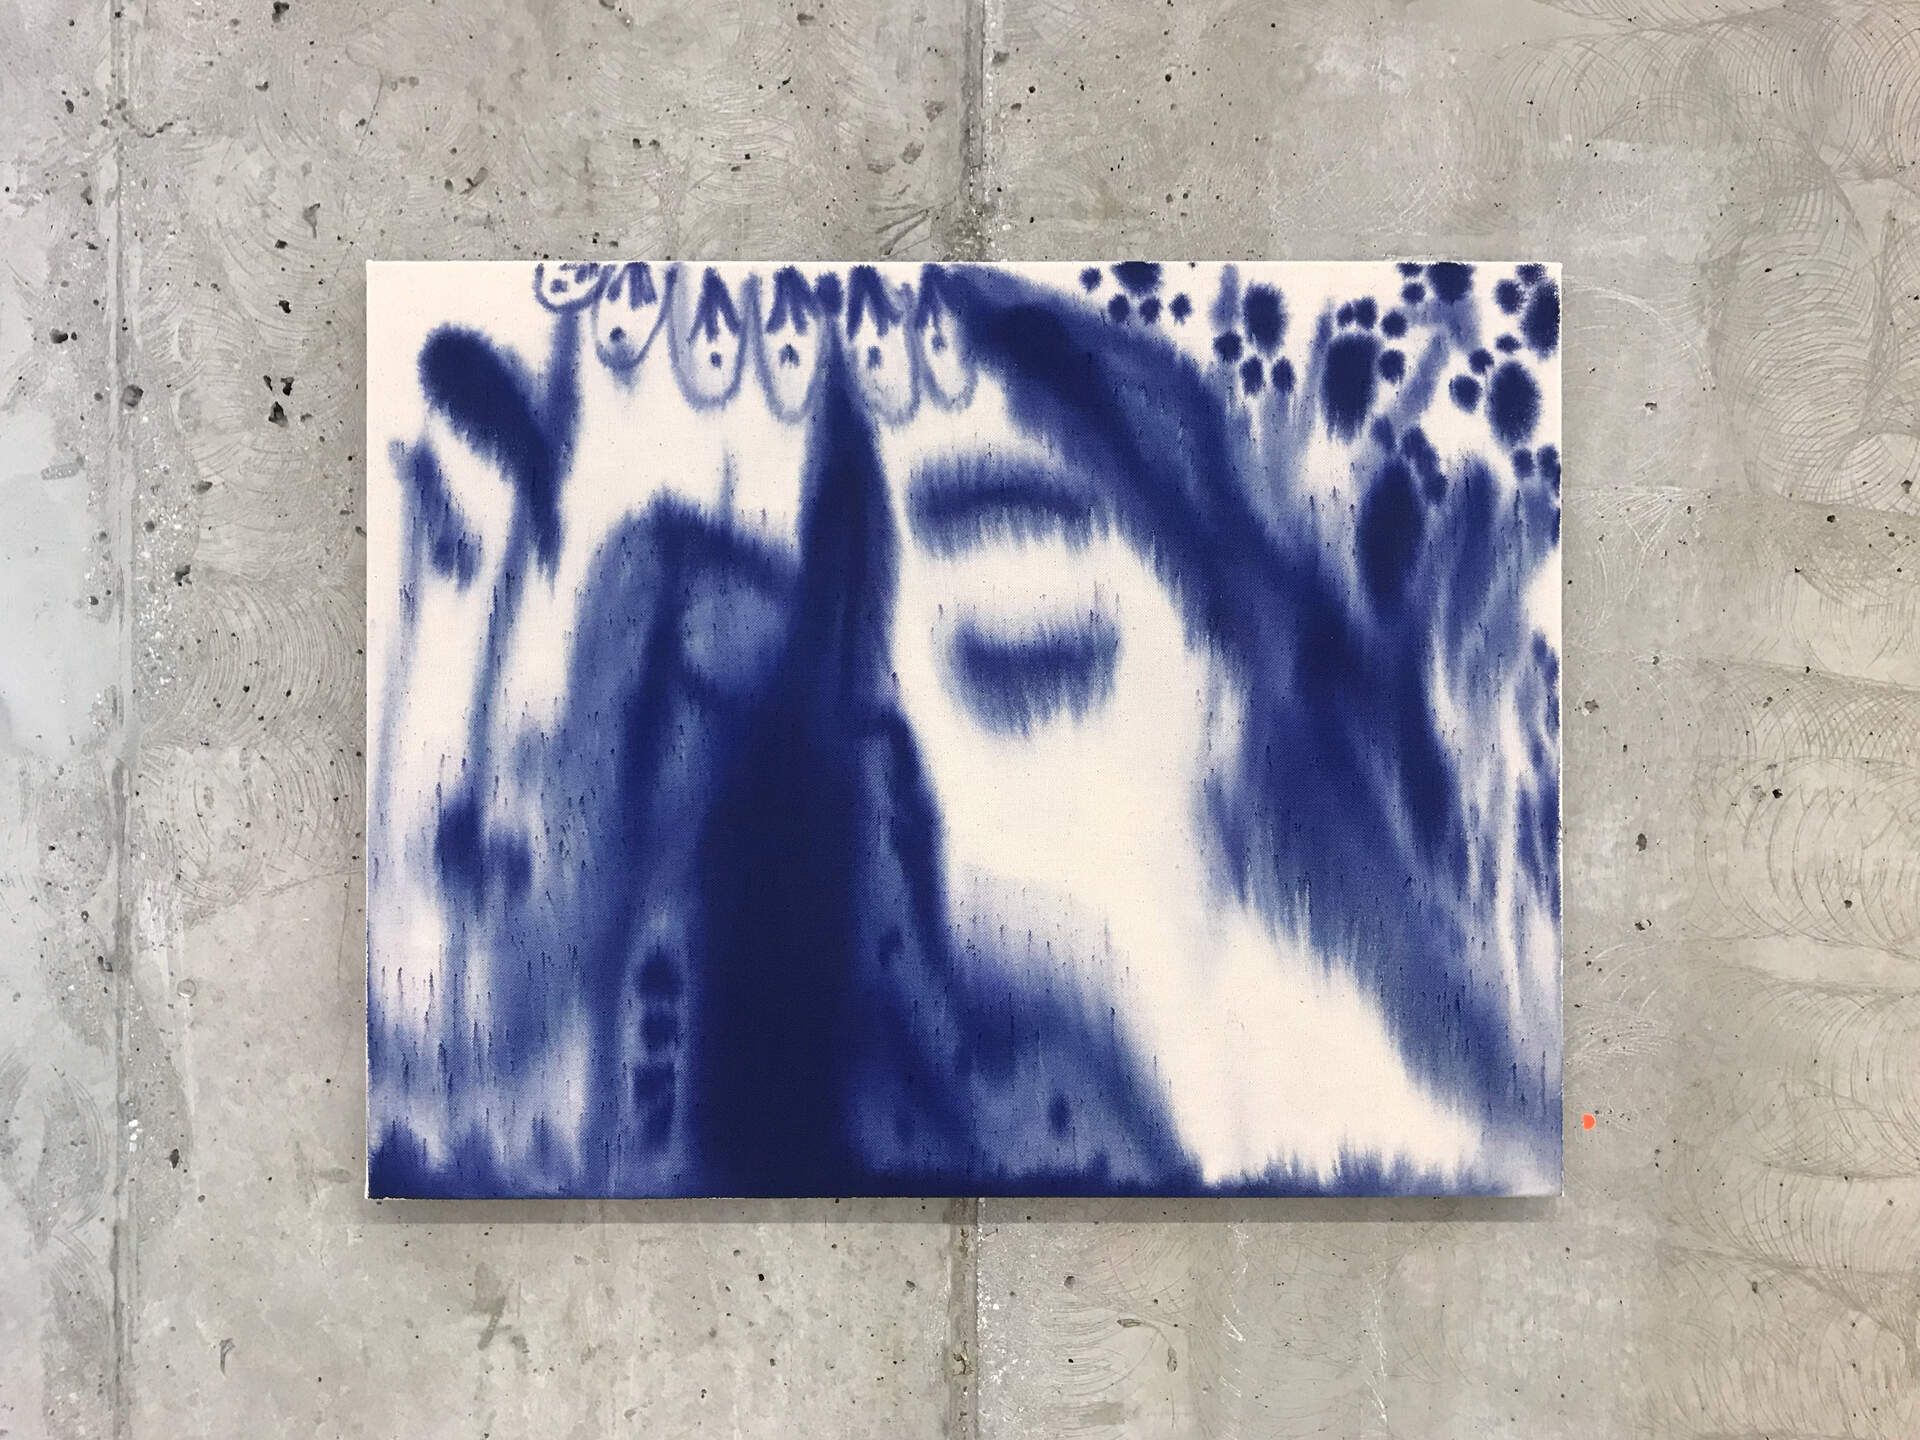 48 x 62 cm _ Indigo on cotton fabric, 2019